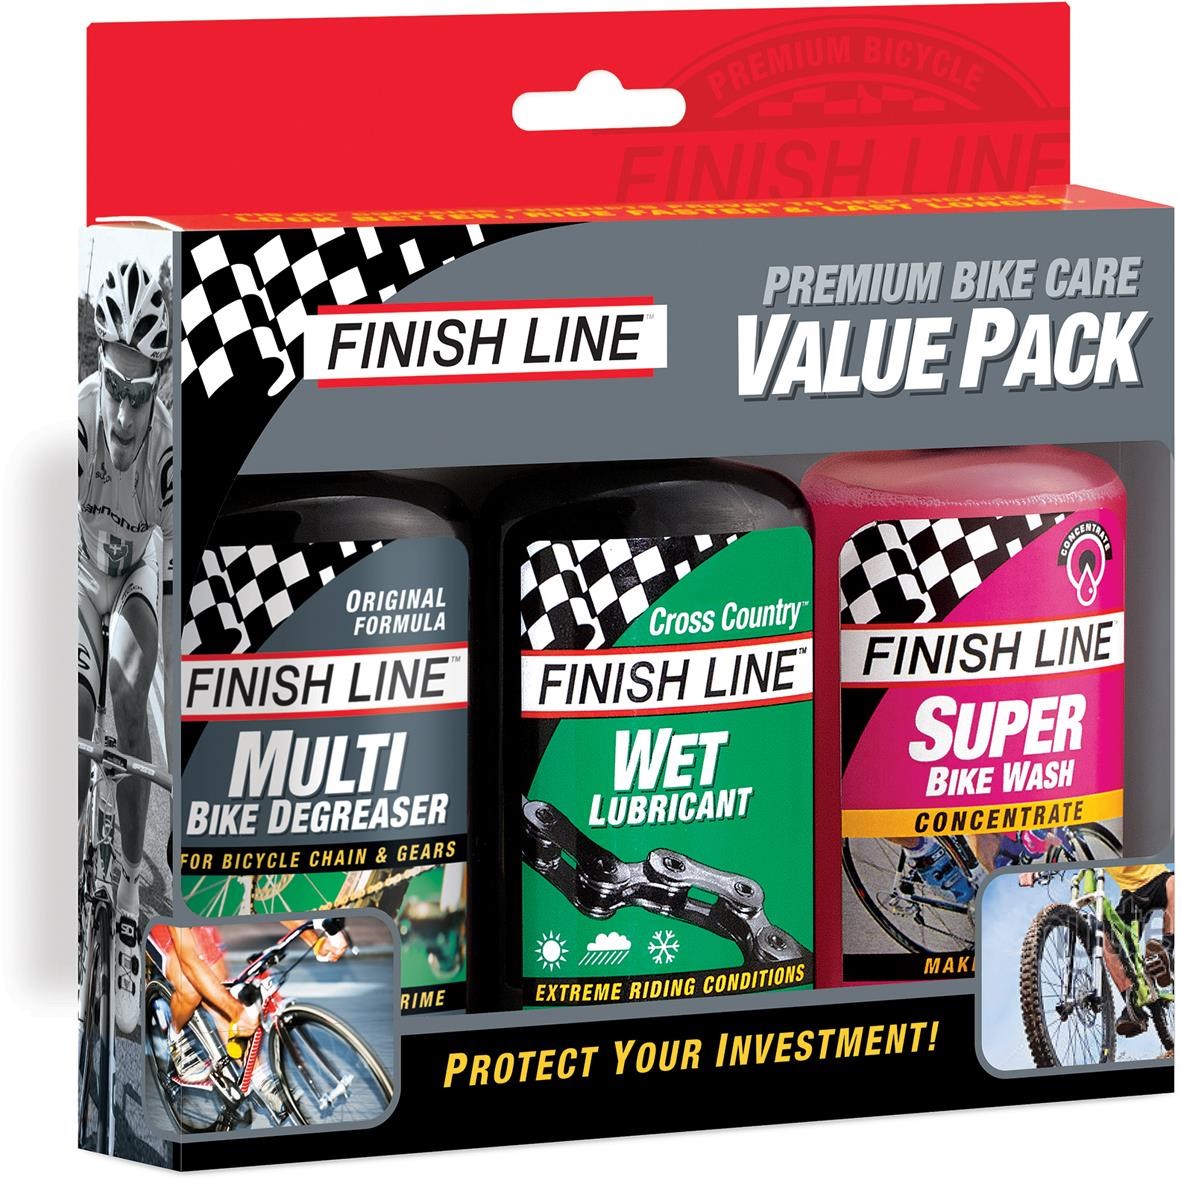 Finish Line Bike Care Value Pack product image